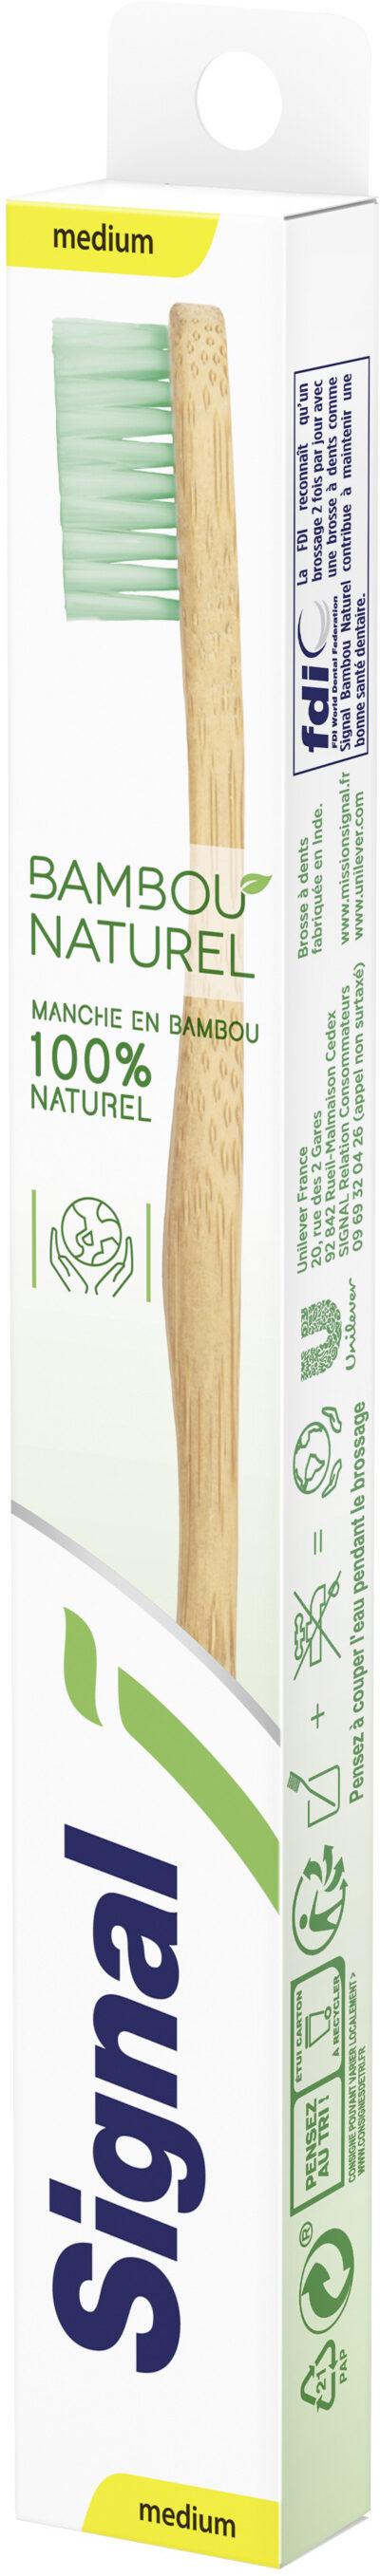 Signal Brosse à Dents Bambou Naturel Medium x1 - Produit - fr